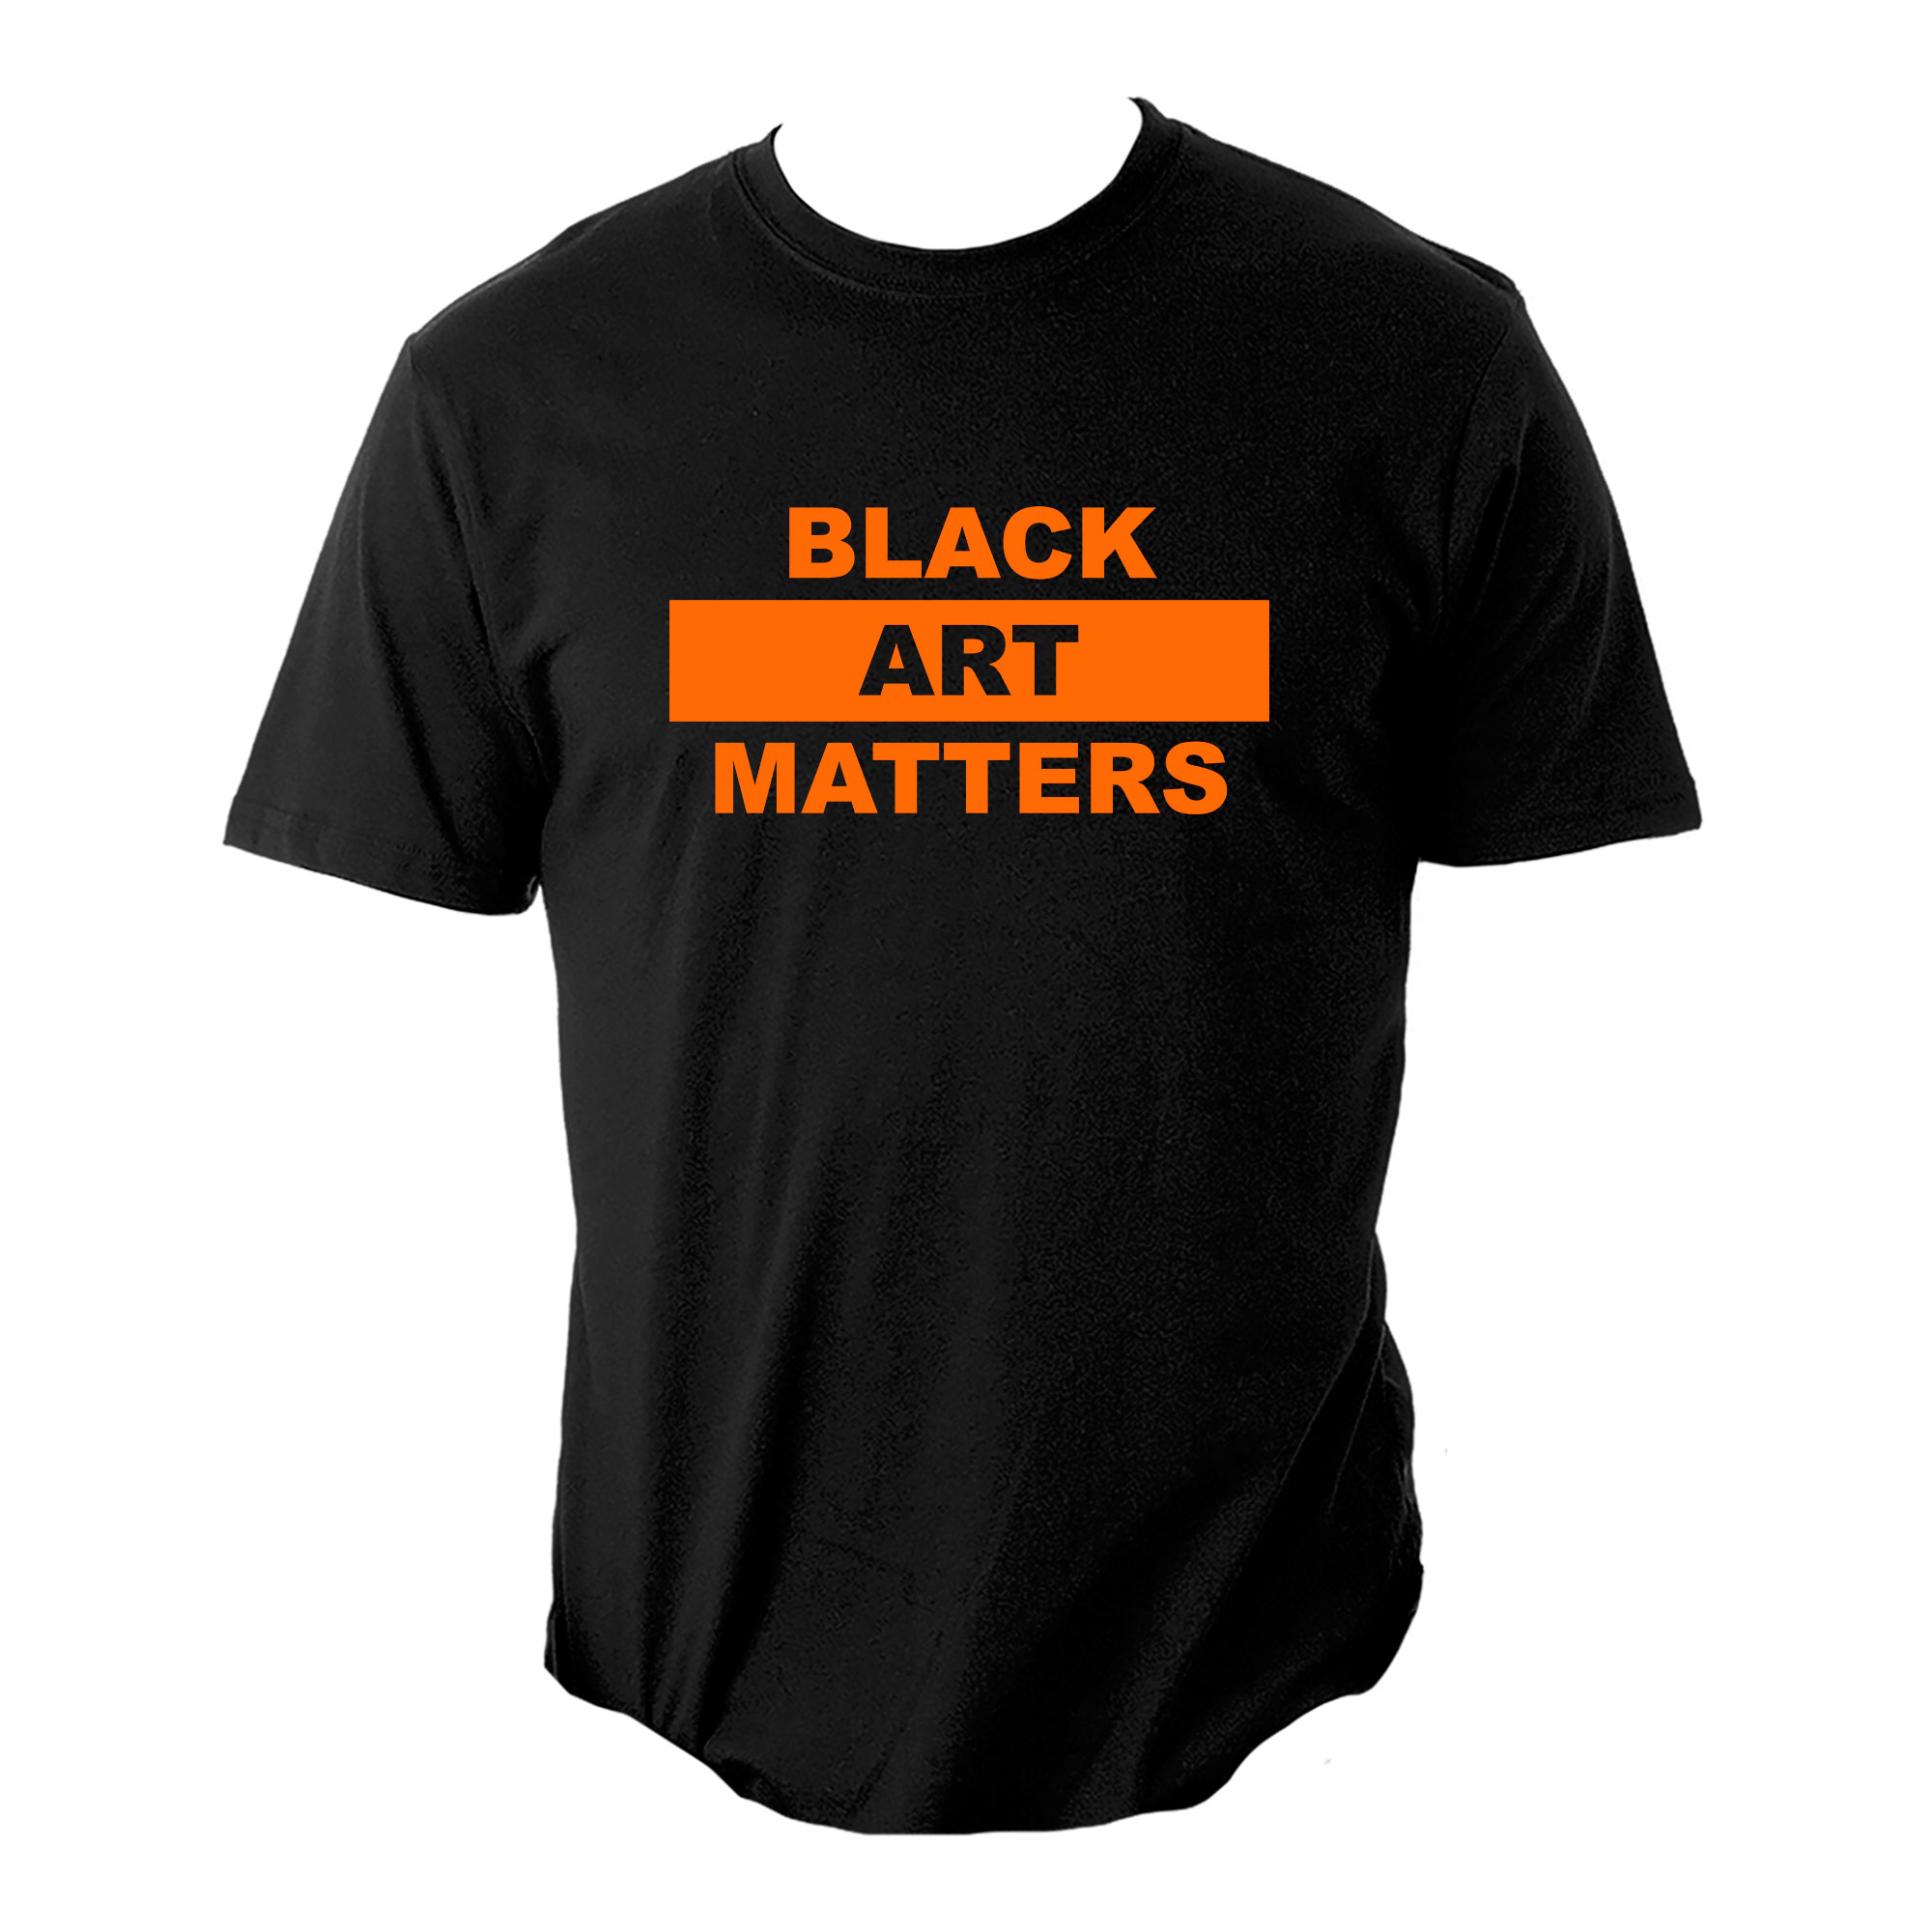 Black Art Matters tee shirt, small